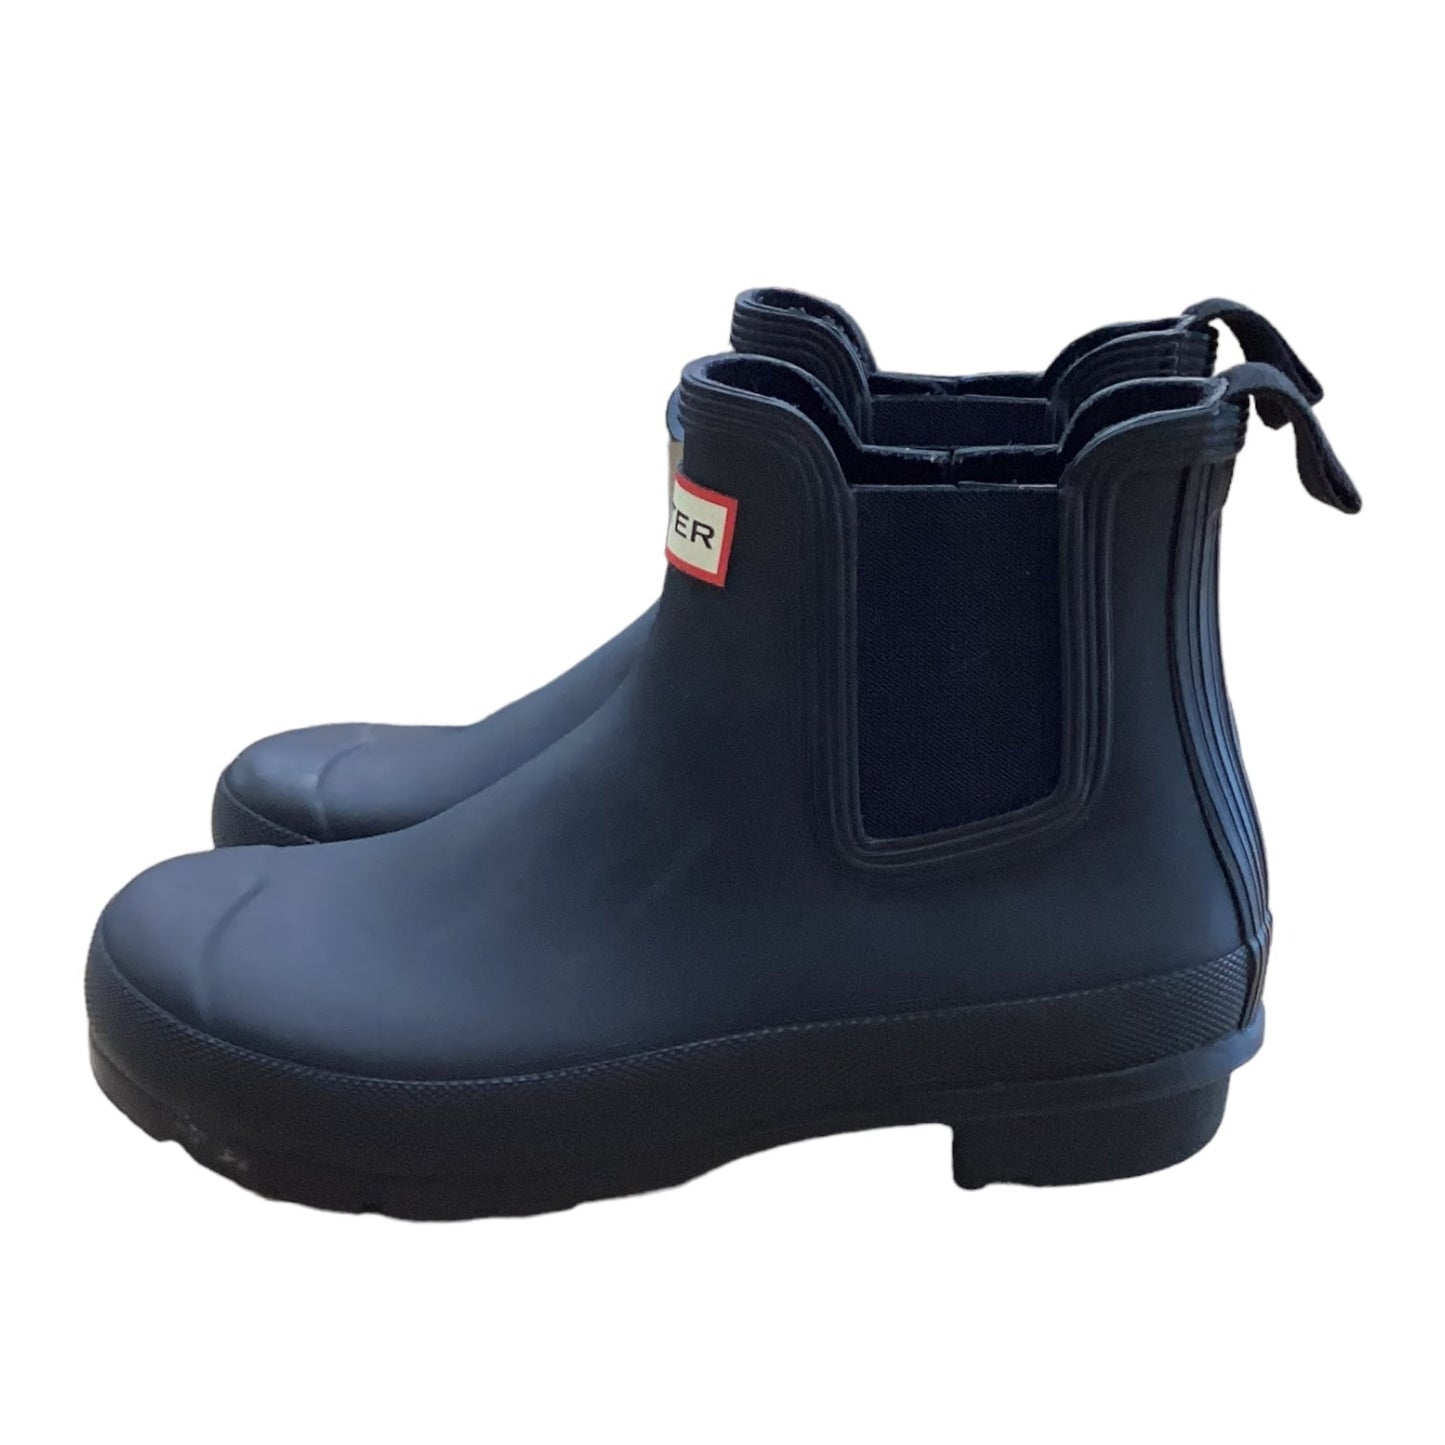 Black Boots Rain Hunter, Size 7